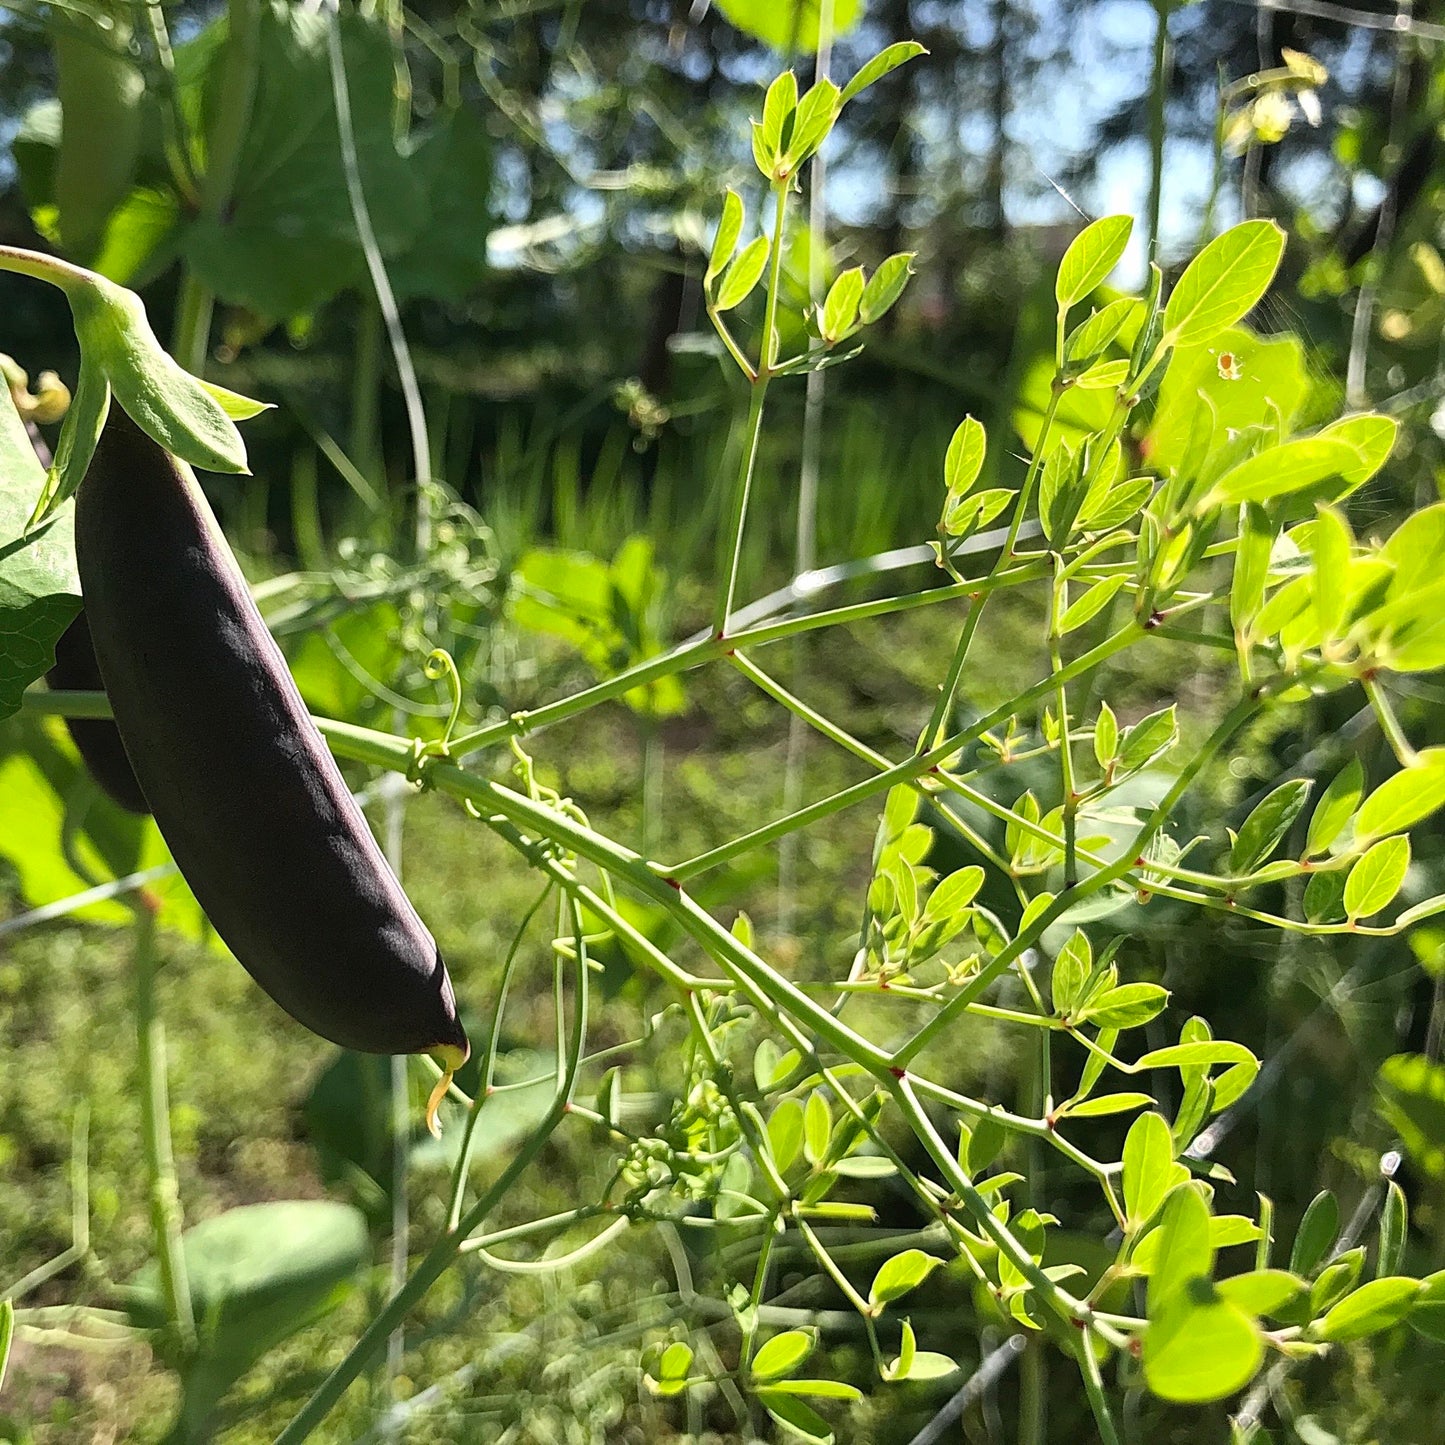 Leafy hypertendril of a purple snap pea vine.